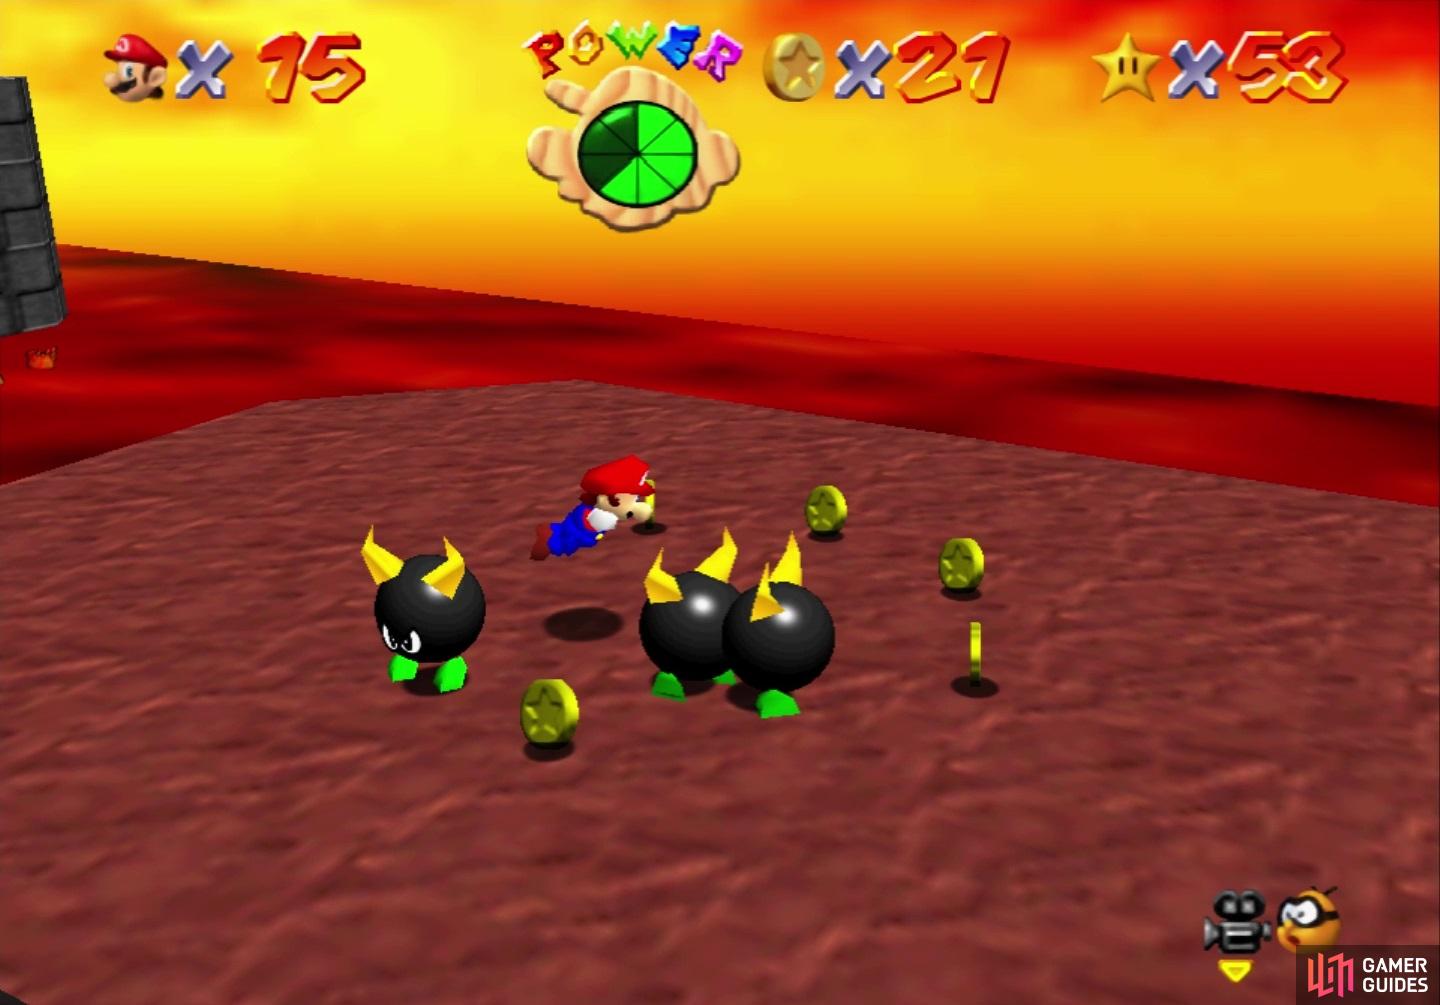 Bully the Bullies - Lethal Lava Land - Super Mario 64